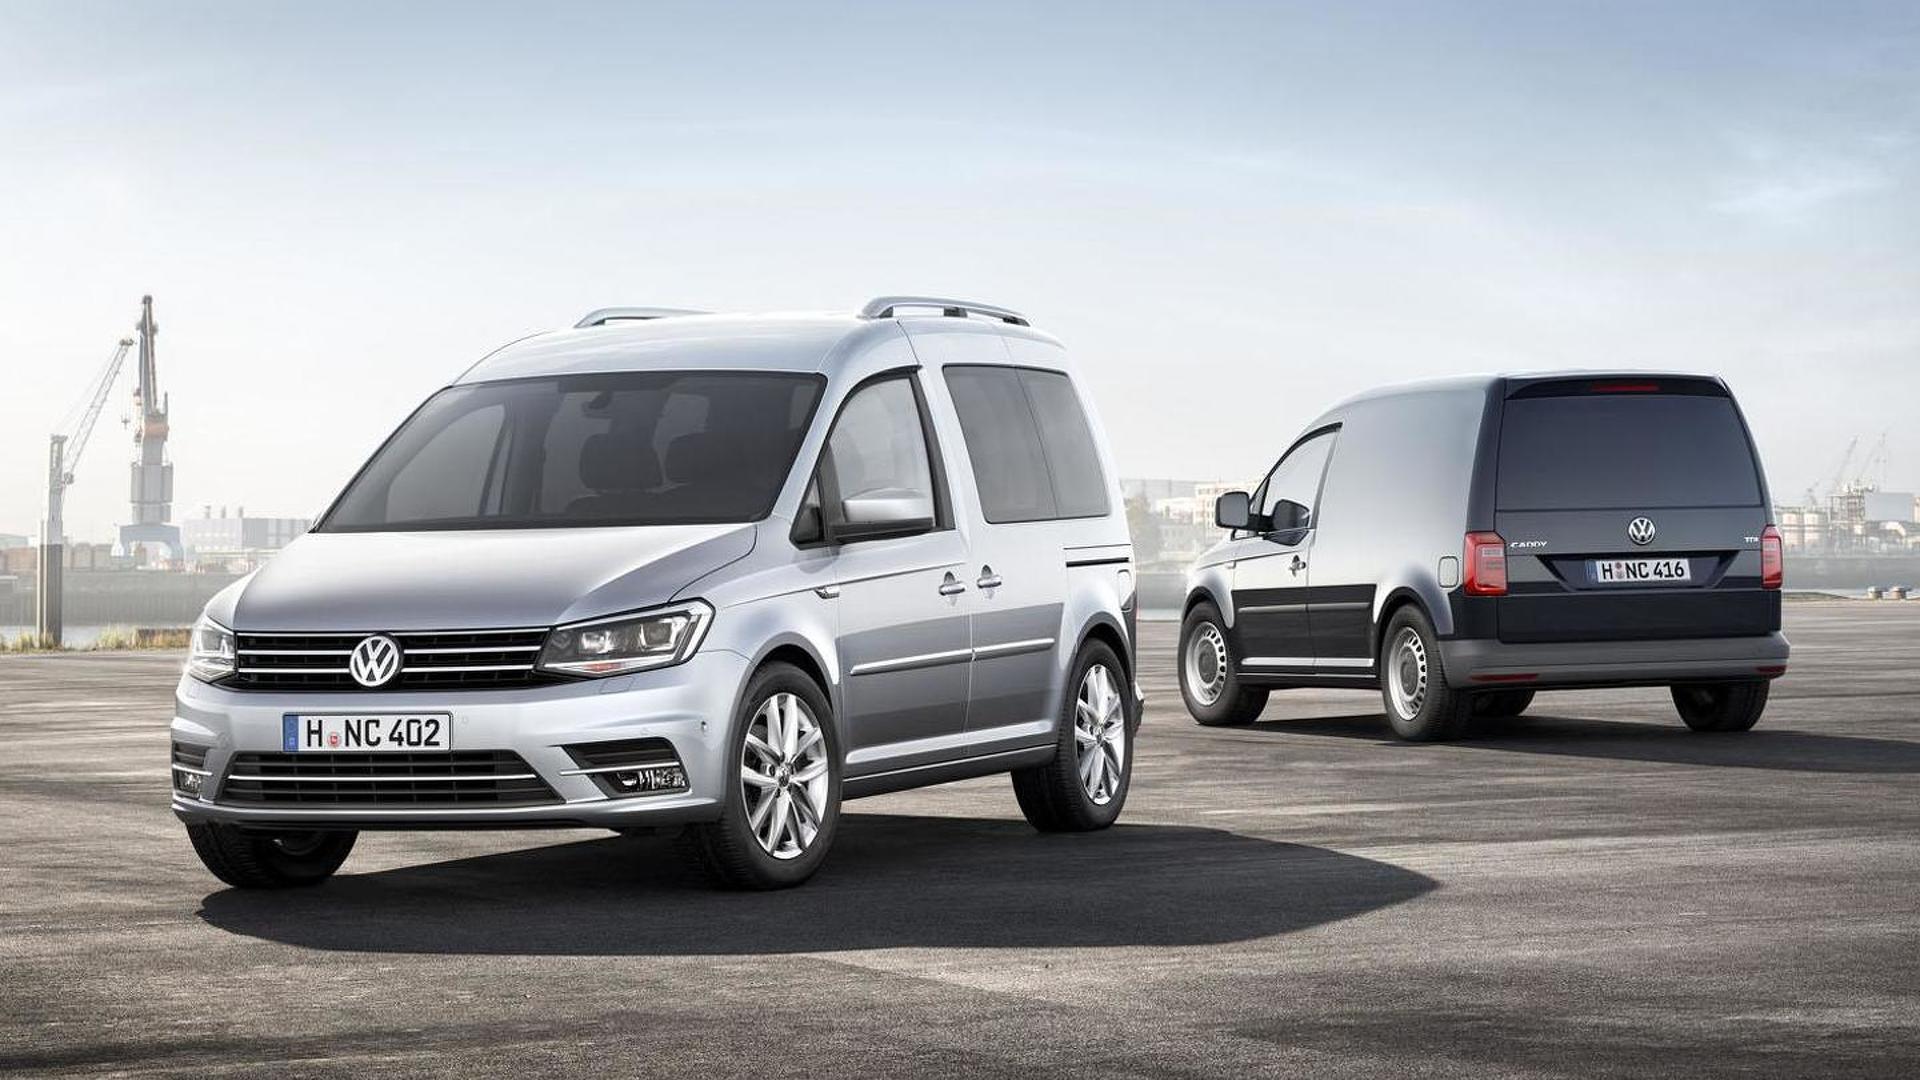 Volkswagen Caddy unveiled